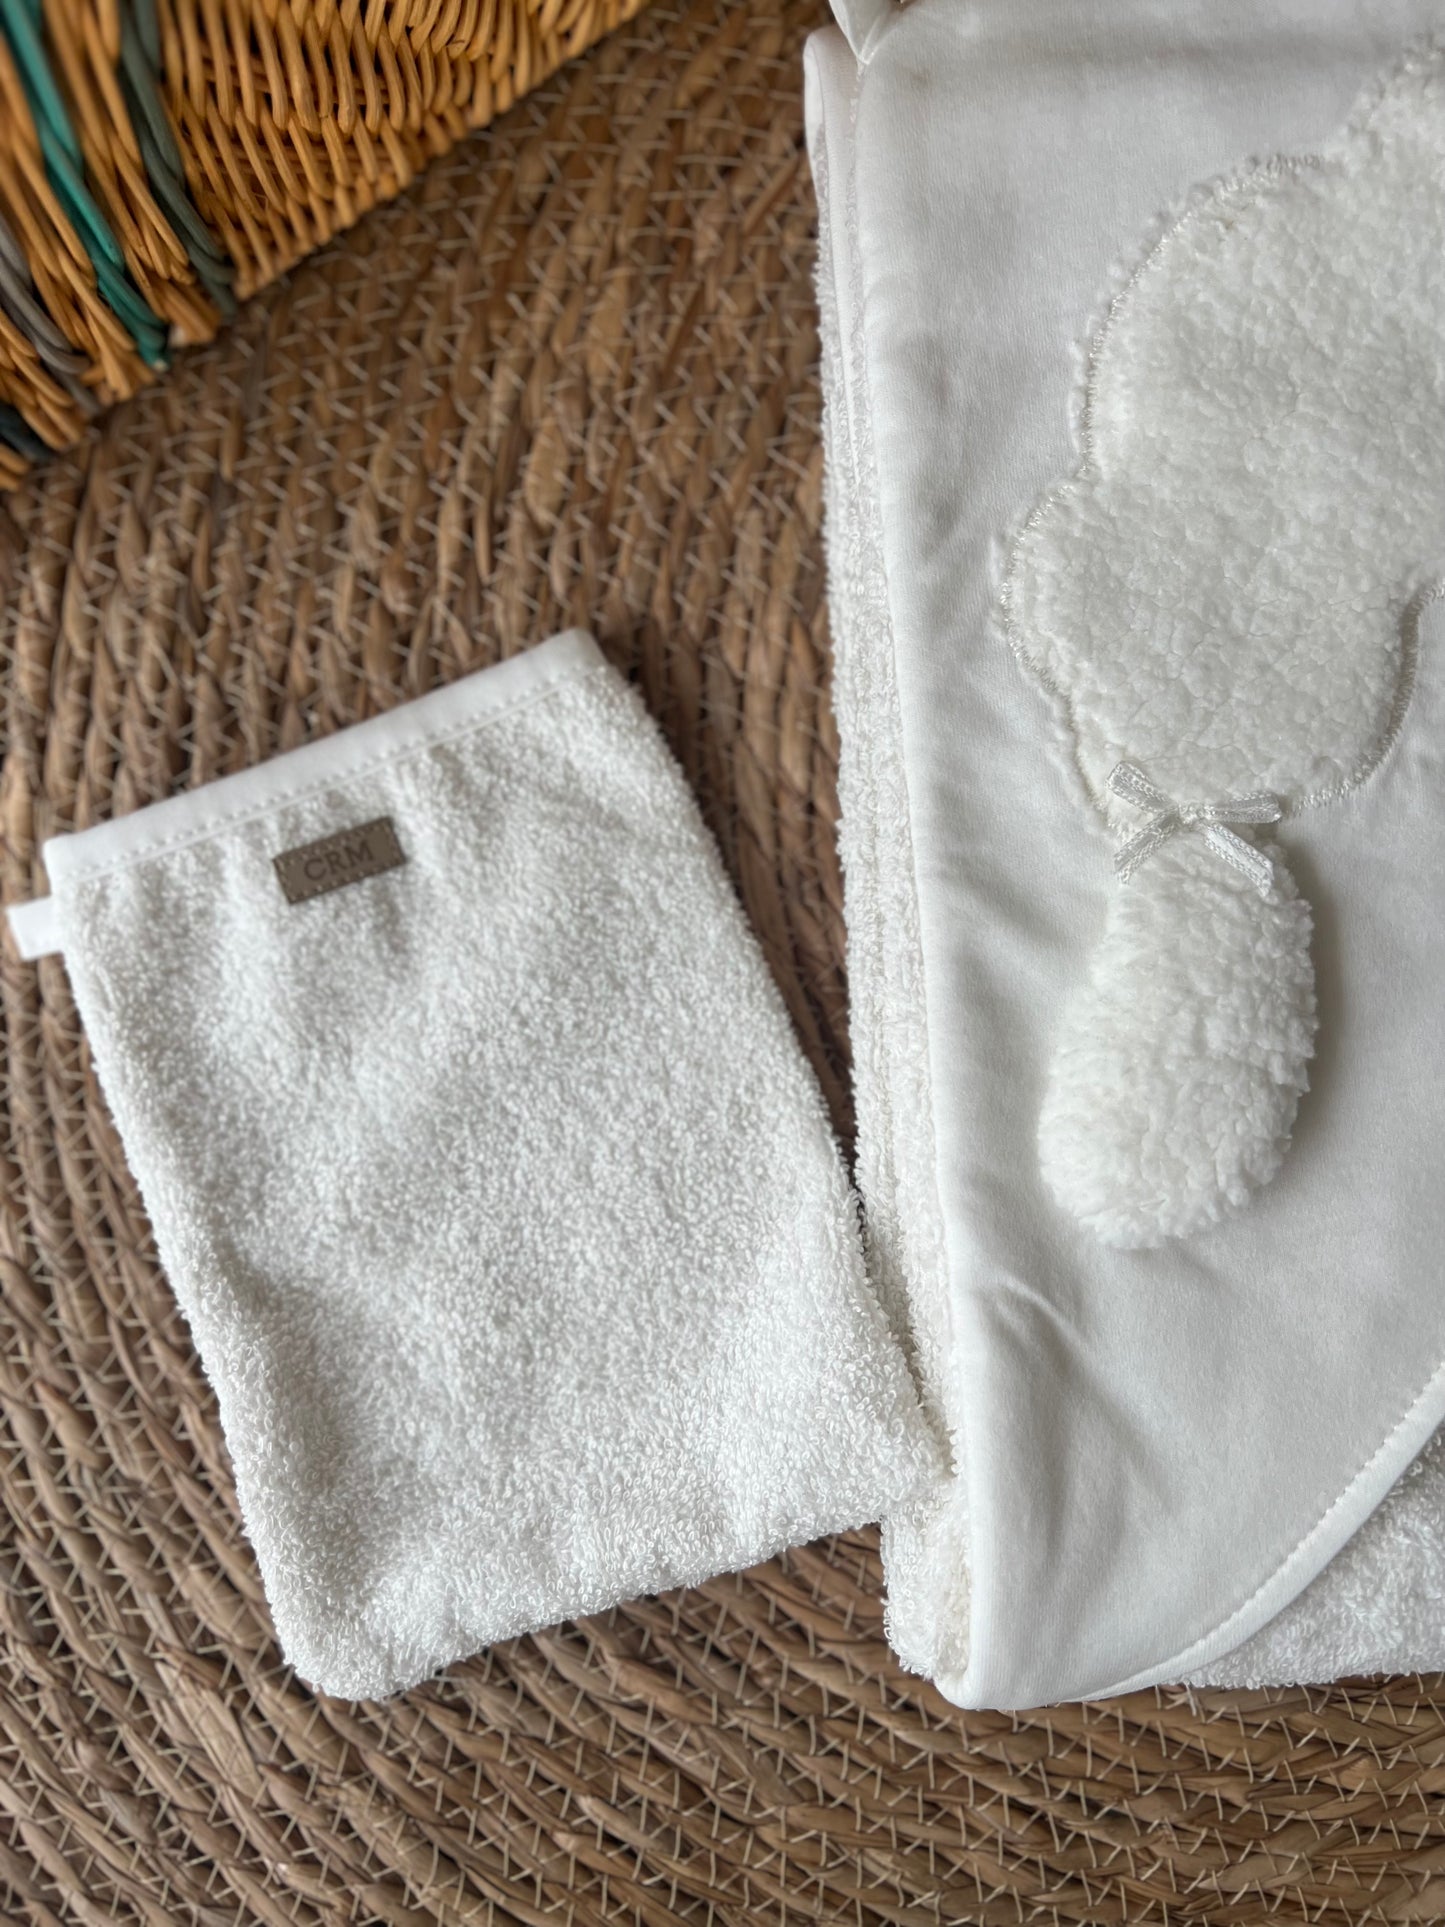 Sheep Bath Towel With Glove-White